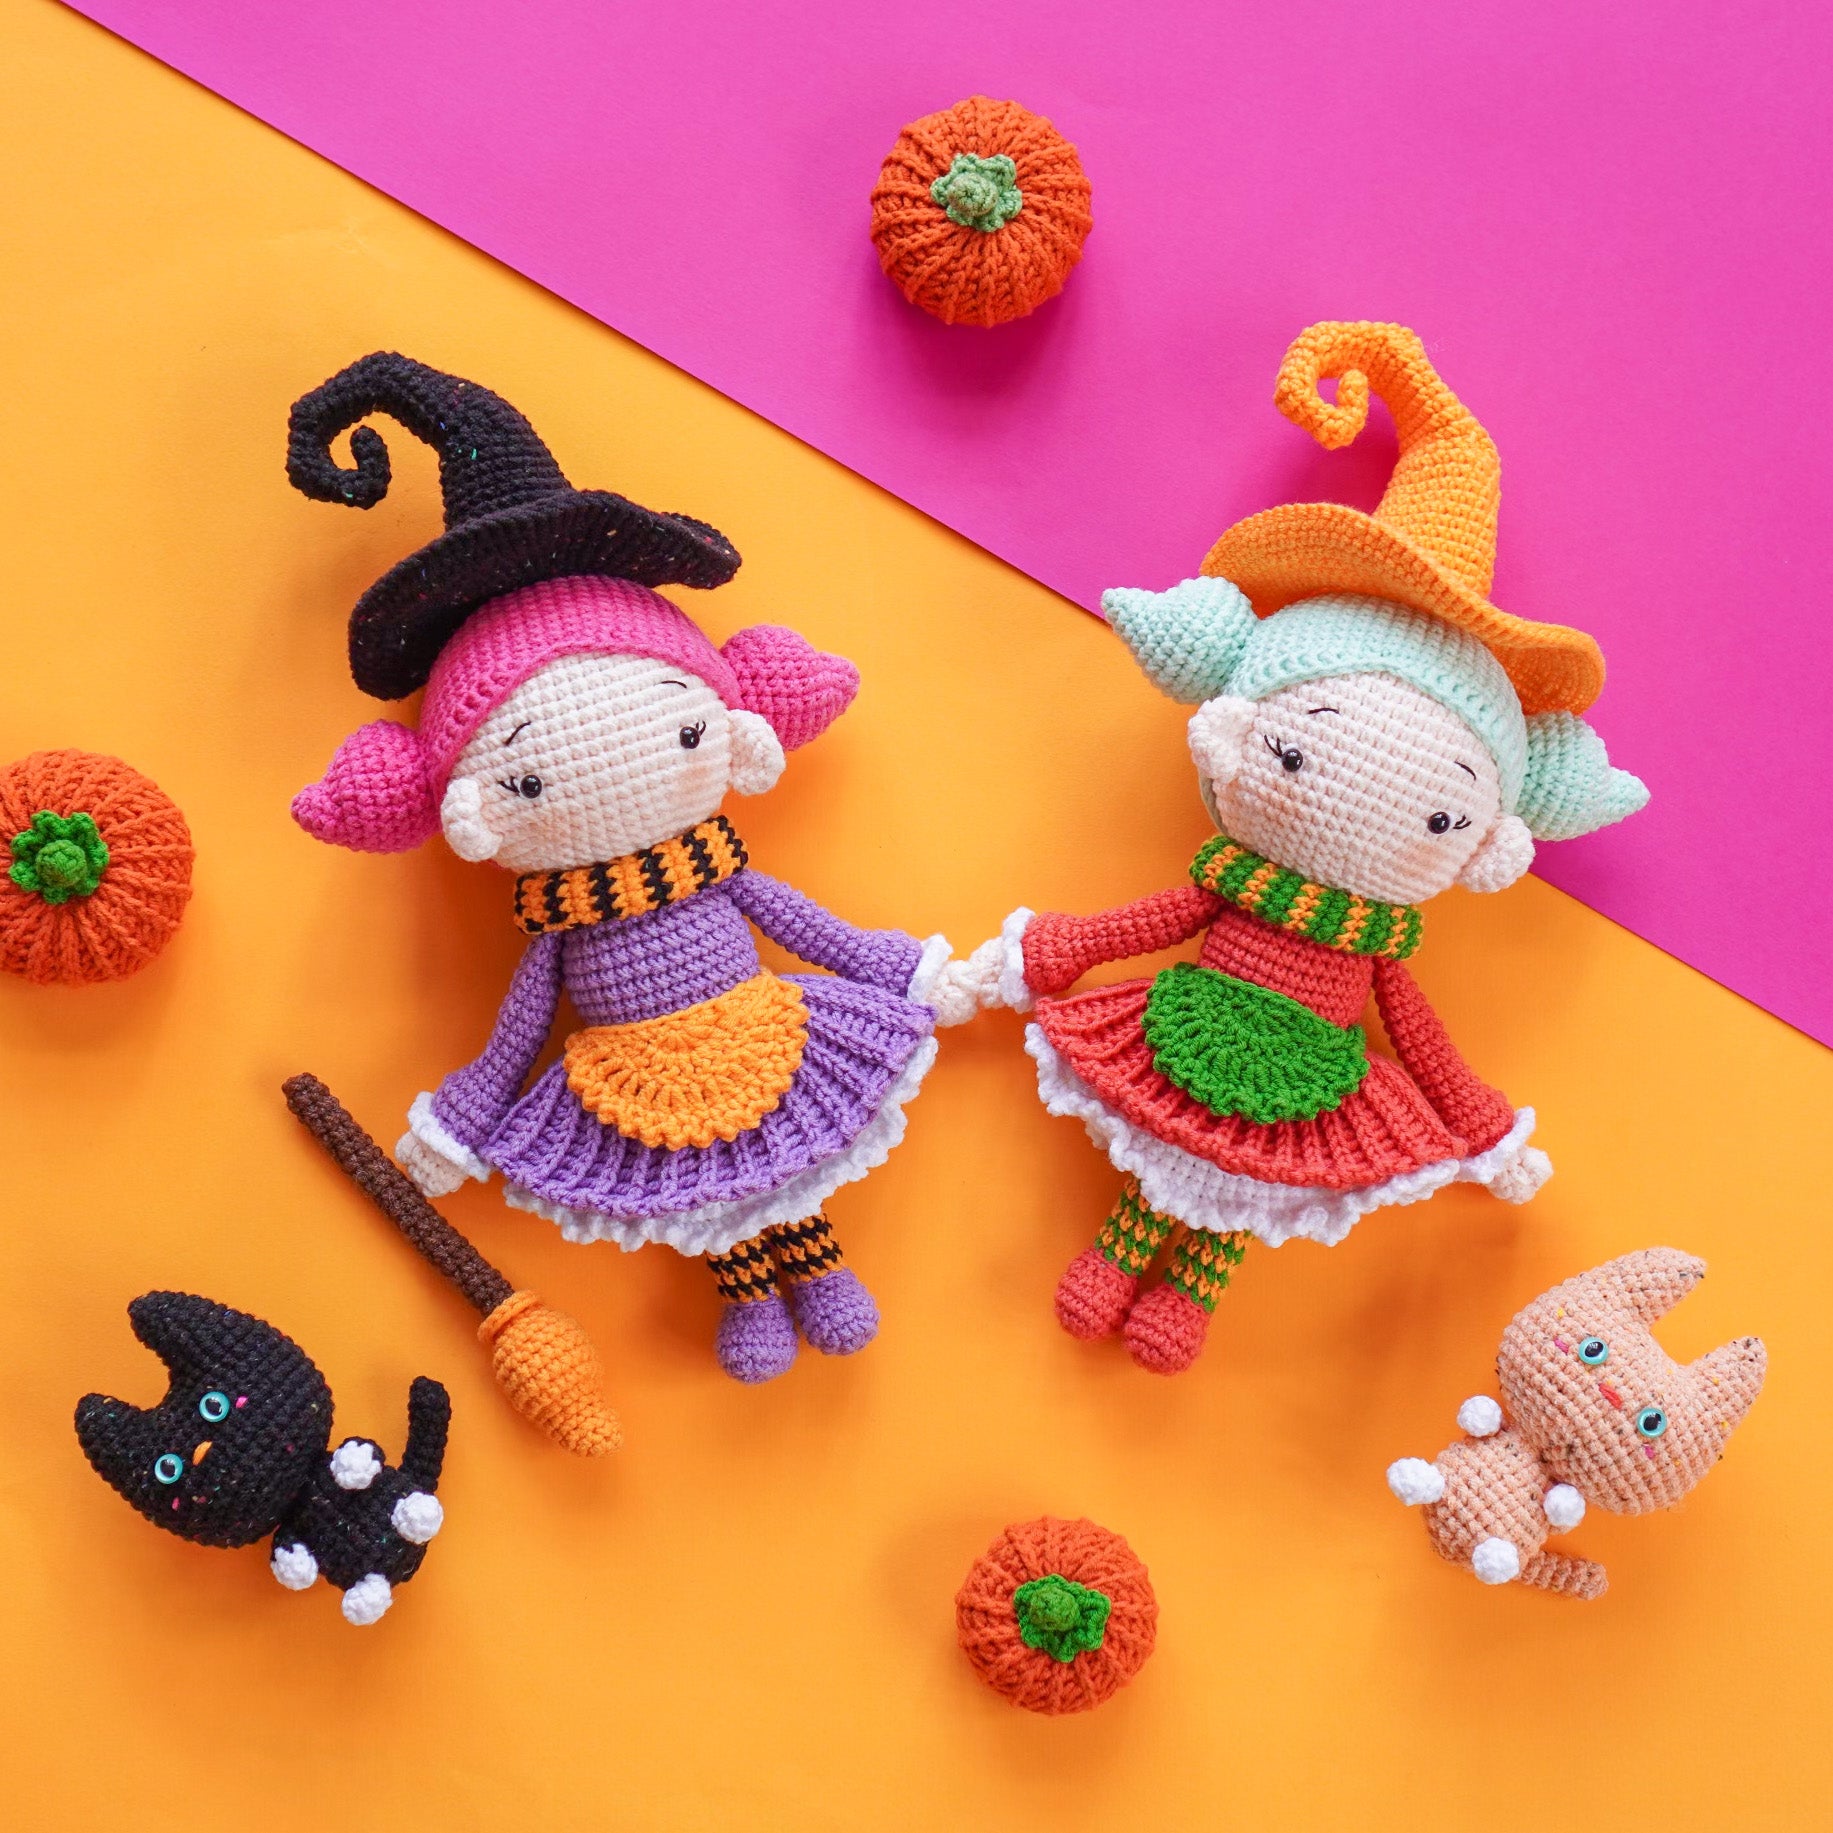 Bundle 3 Halloween Amigurumi Dolls/Crocheted Dolls Crochet Pattern by Aquariwool Crochet (Amigurumi Pattern for Baby gift)